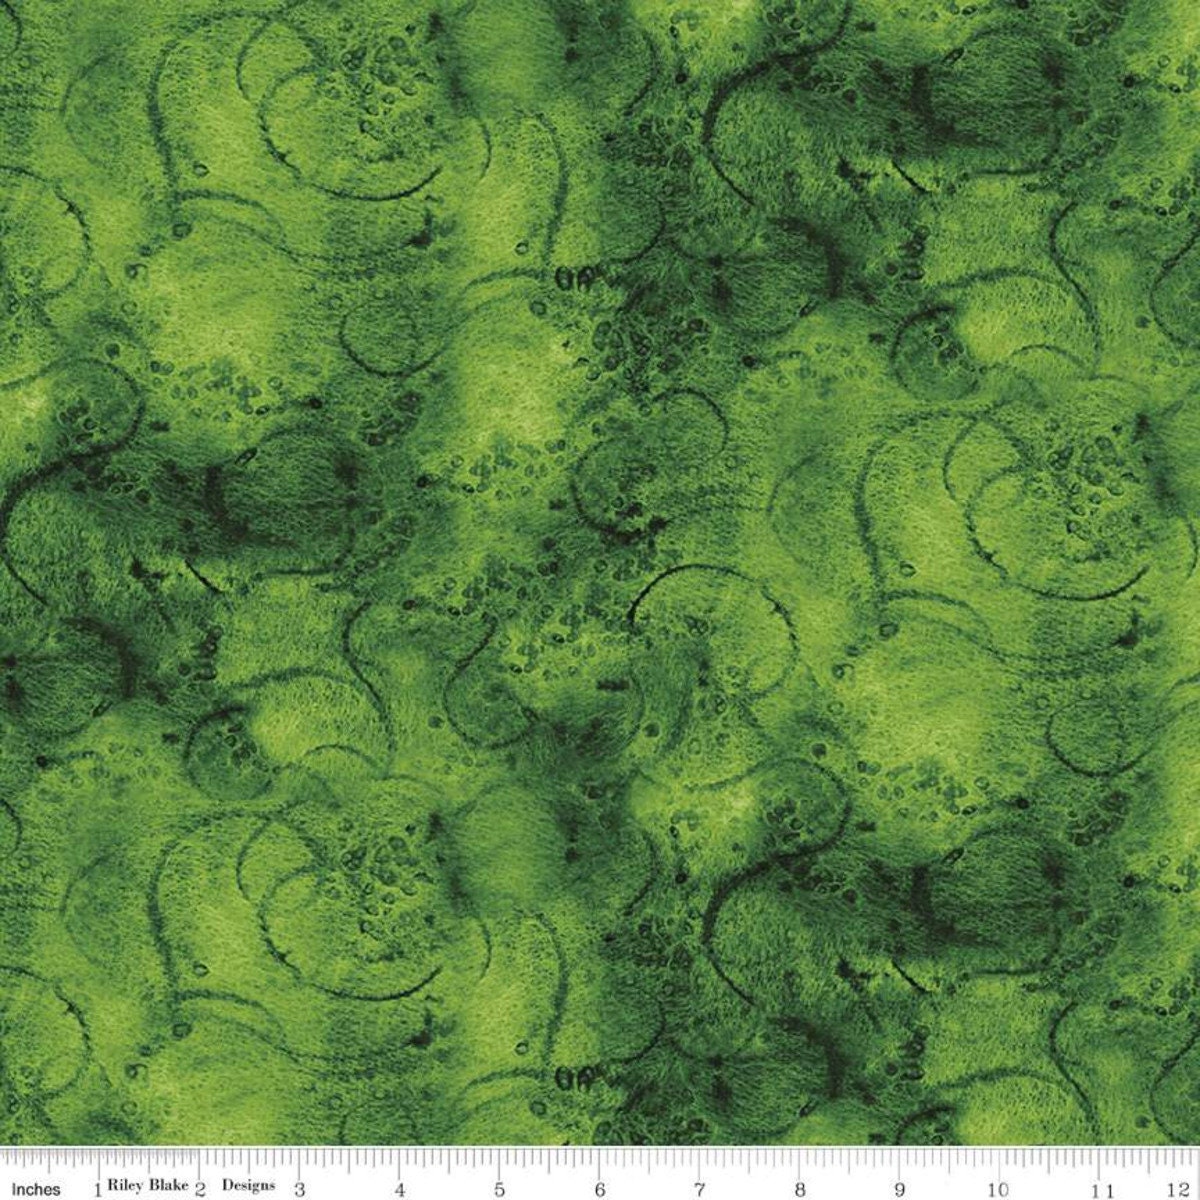 Painter's Watercolor Swirl Dark Green Fabric - Riley Blake Designs C680-DKGREEN, Dark Green Blender Fabric, Green Swirls Fabric by the Yard